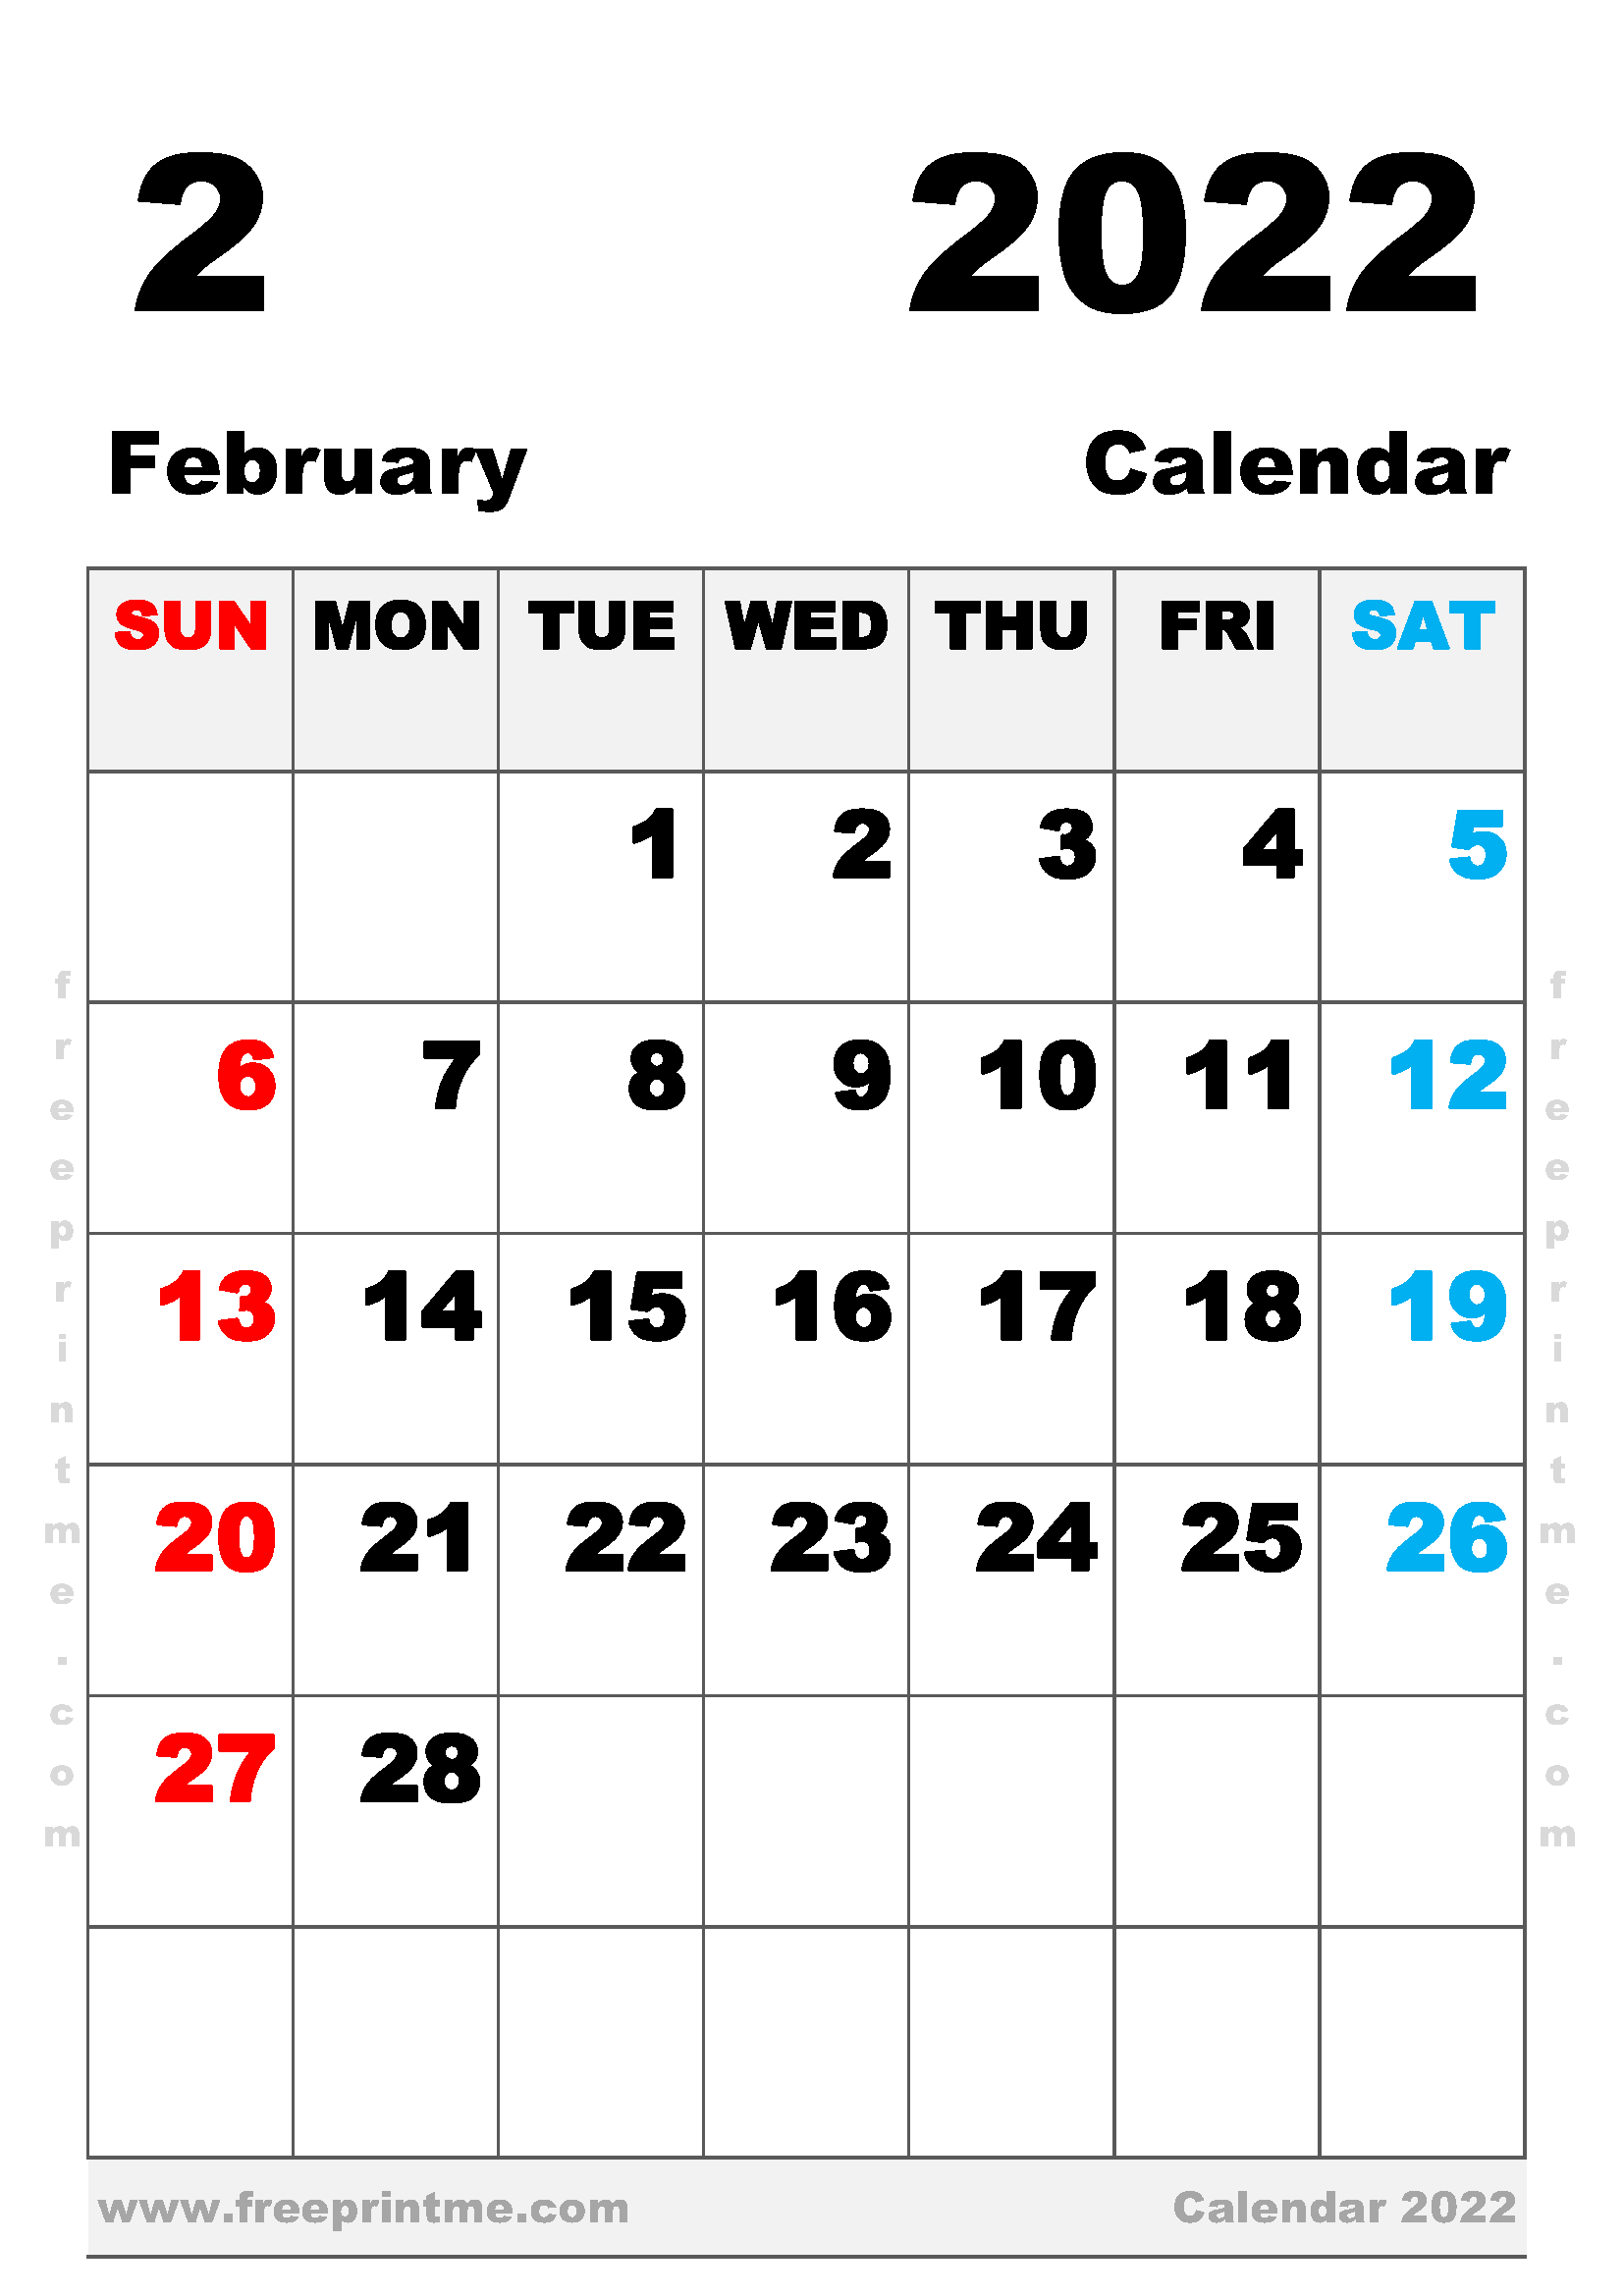 Free Printable February 2022 Calendar Free Printable February 2022 Calendar A4